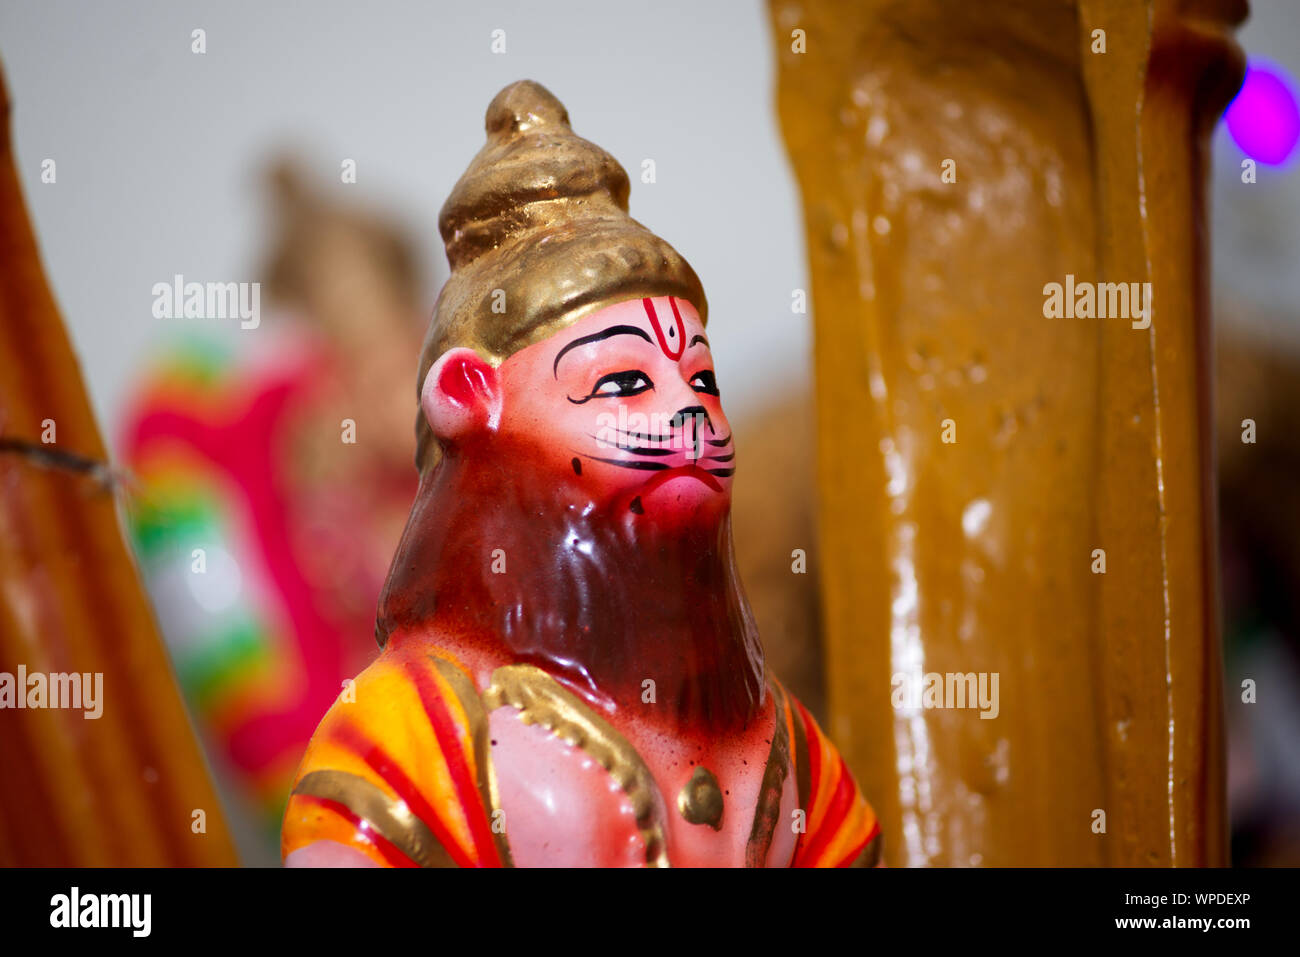 Lord narasimha swamy, The lion face god Stock Photo - Alamy